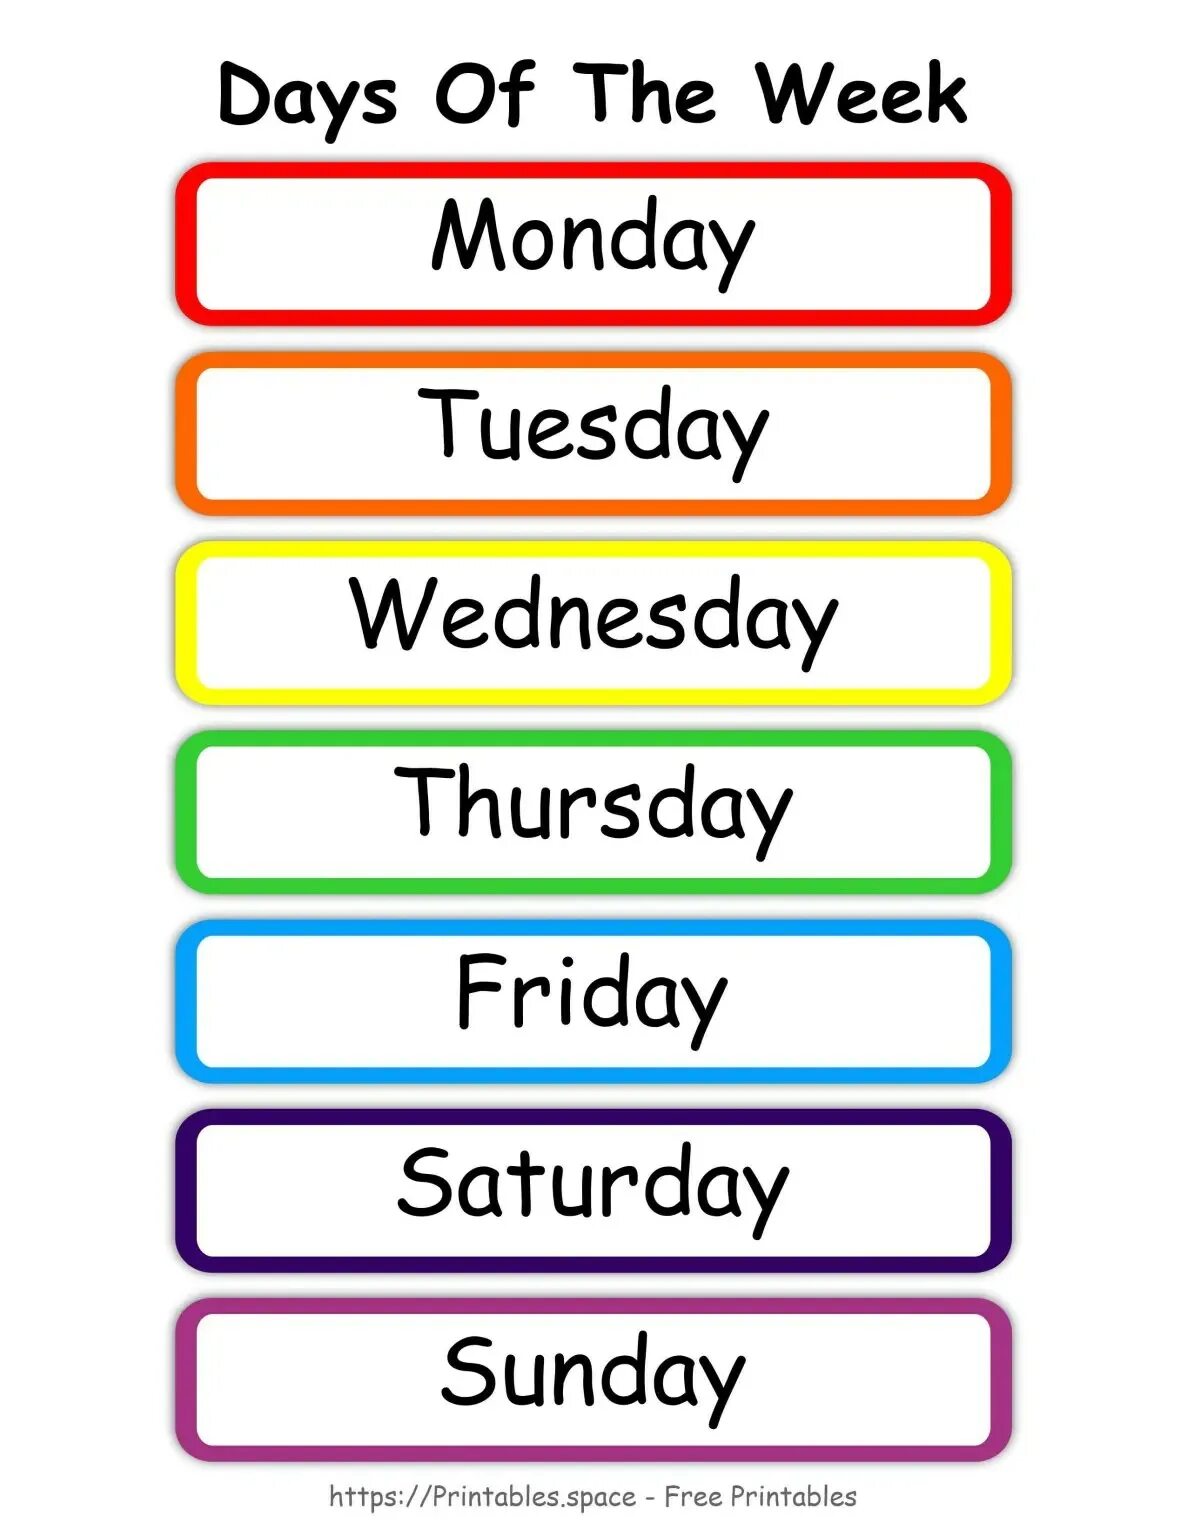 N the week. Days of the week. Days of the week плакат. English Days of the week. Days of the week for Kids.